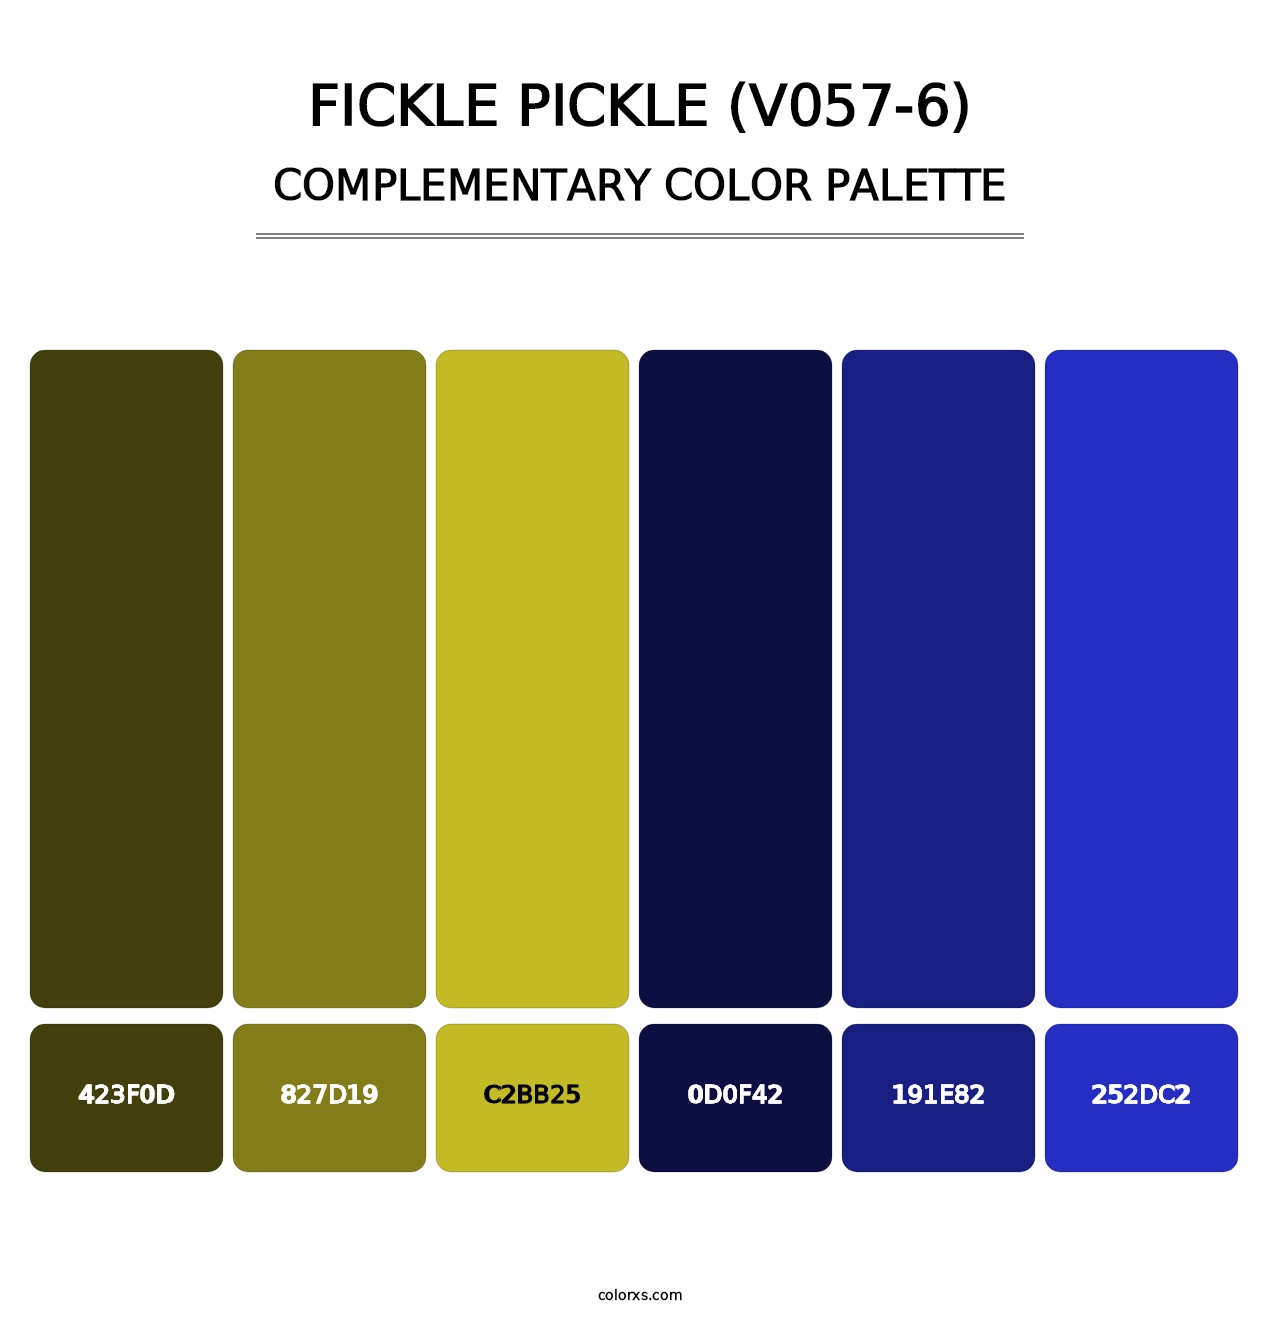 Fickle Pickle (V057-6) - Complementary Color Palette